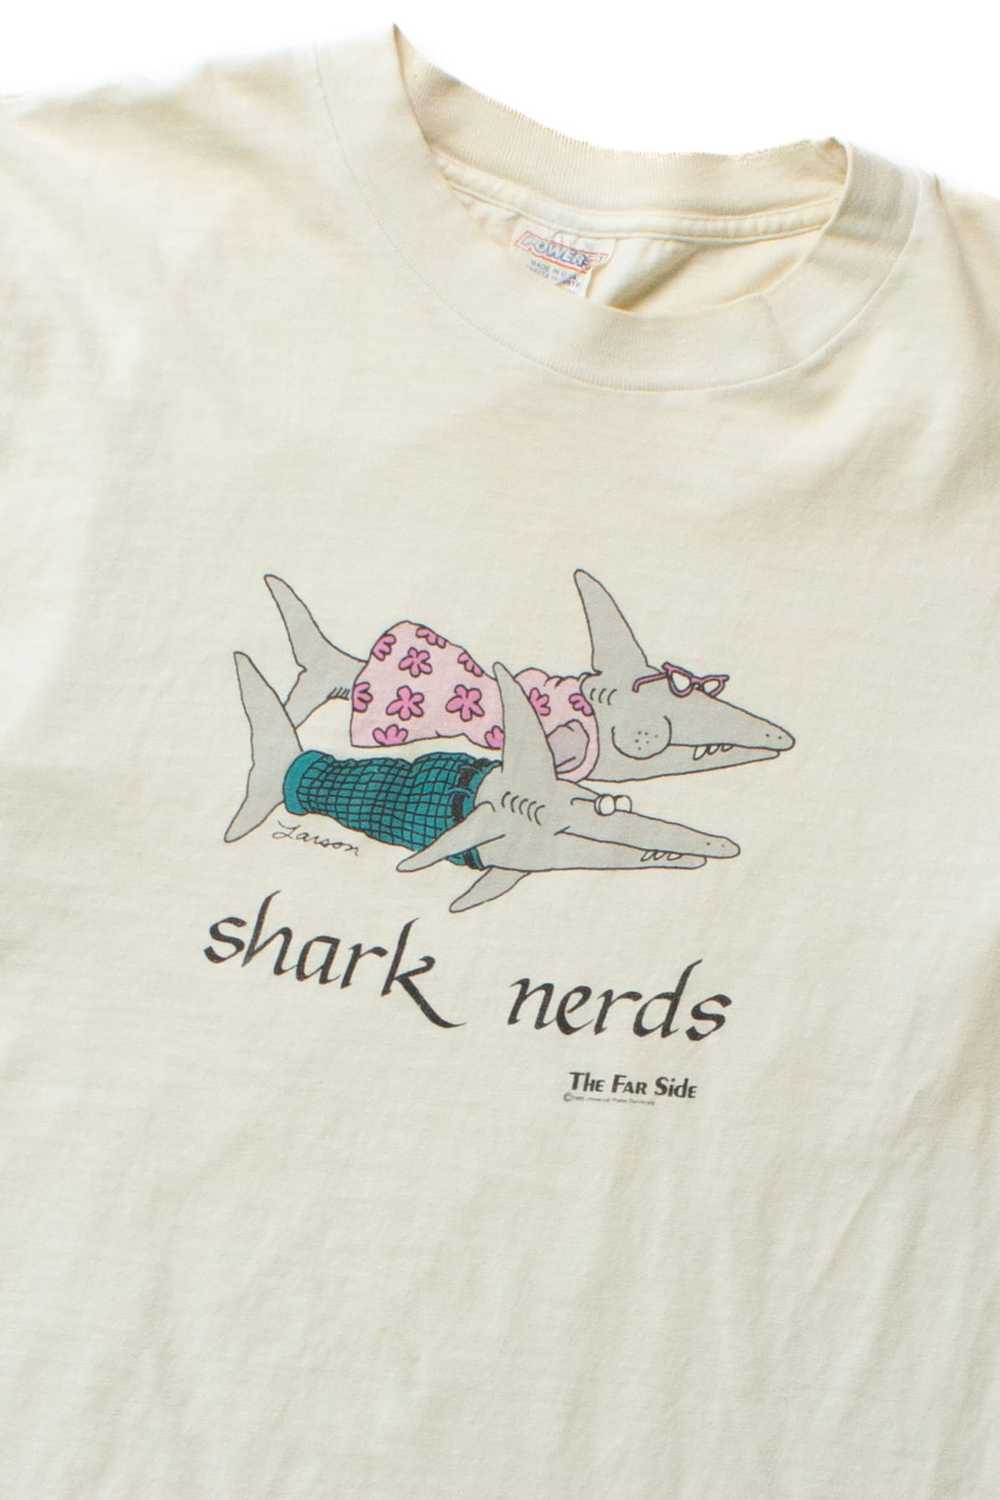 Vintage The Far Side Shark Nerds T-Shirt (1980s) - image 2